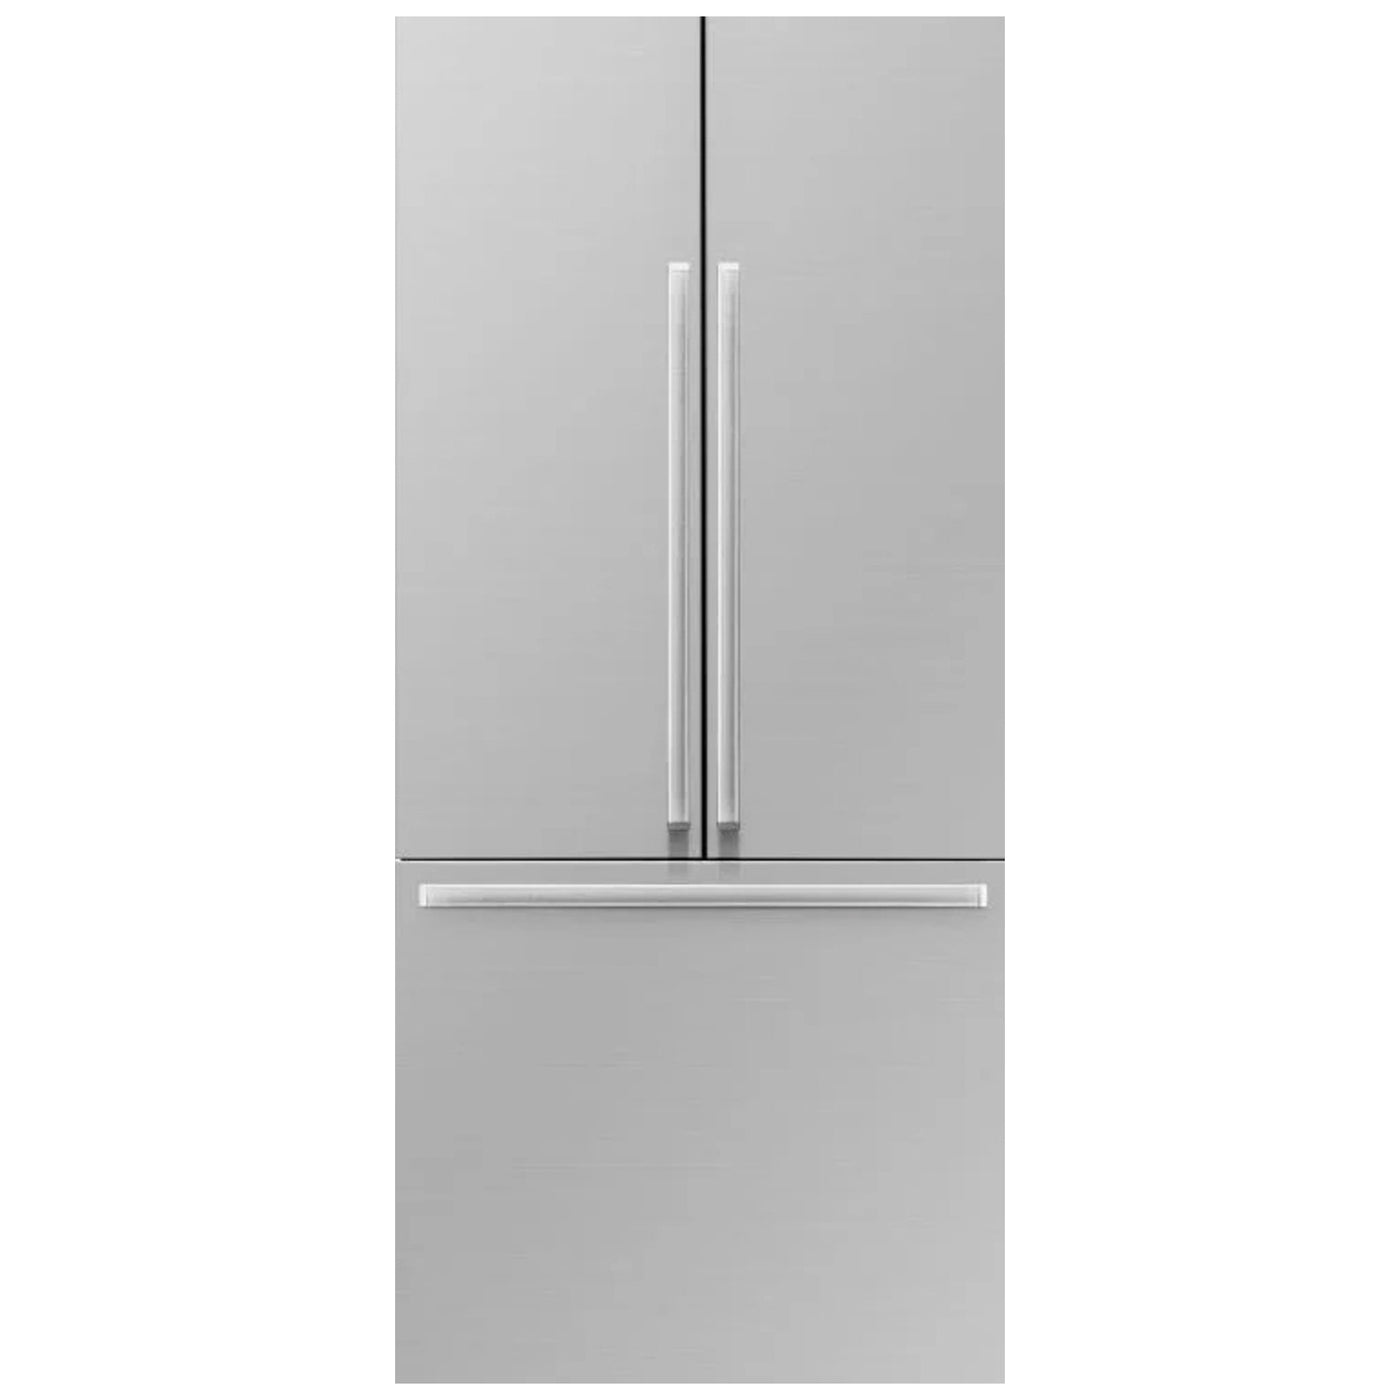 Dacor-Refrigerator-DRF365300AP